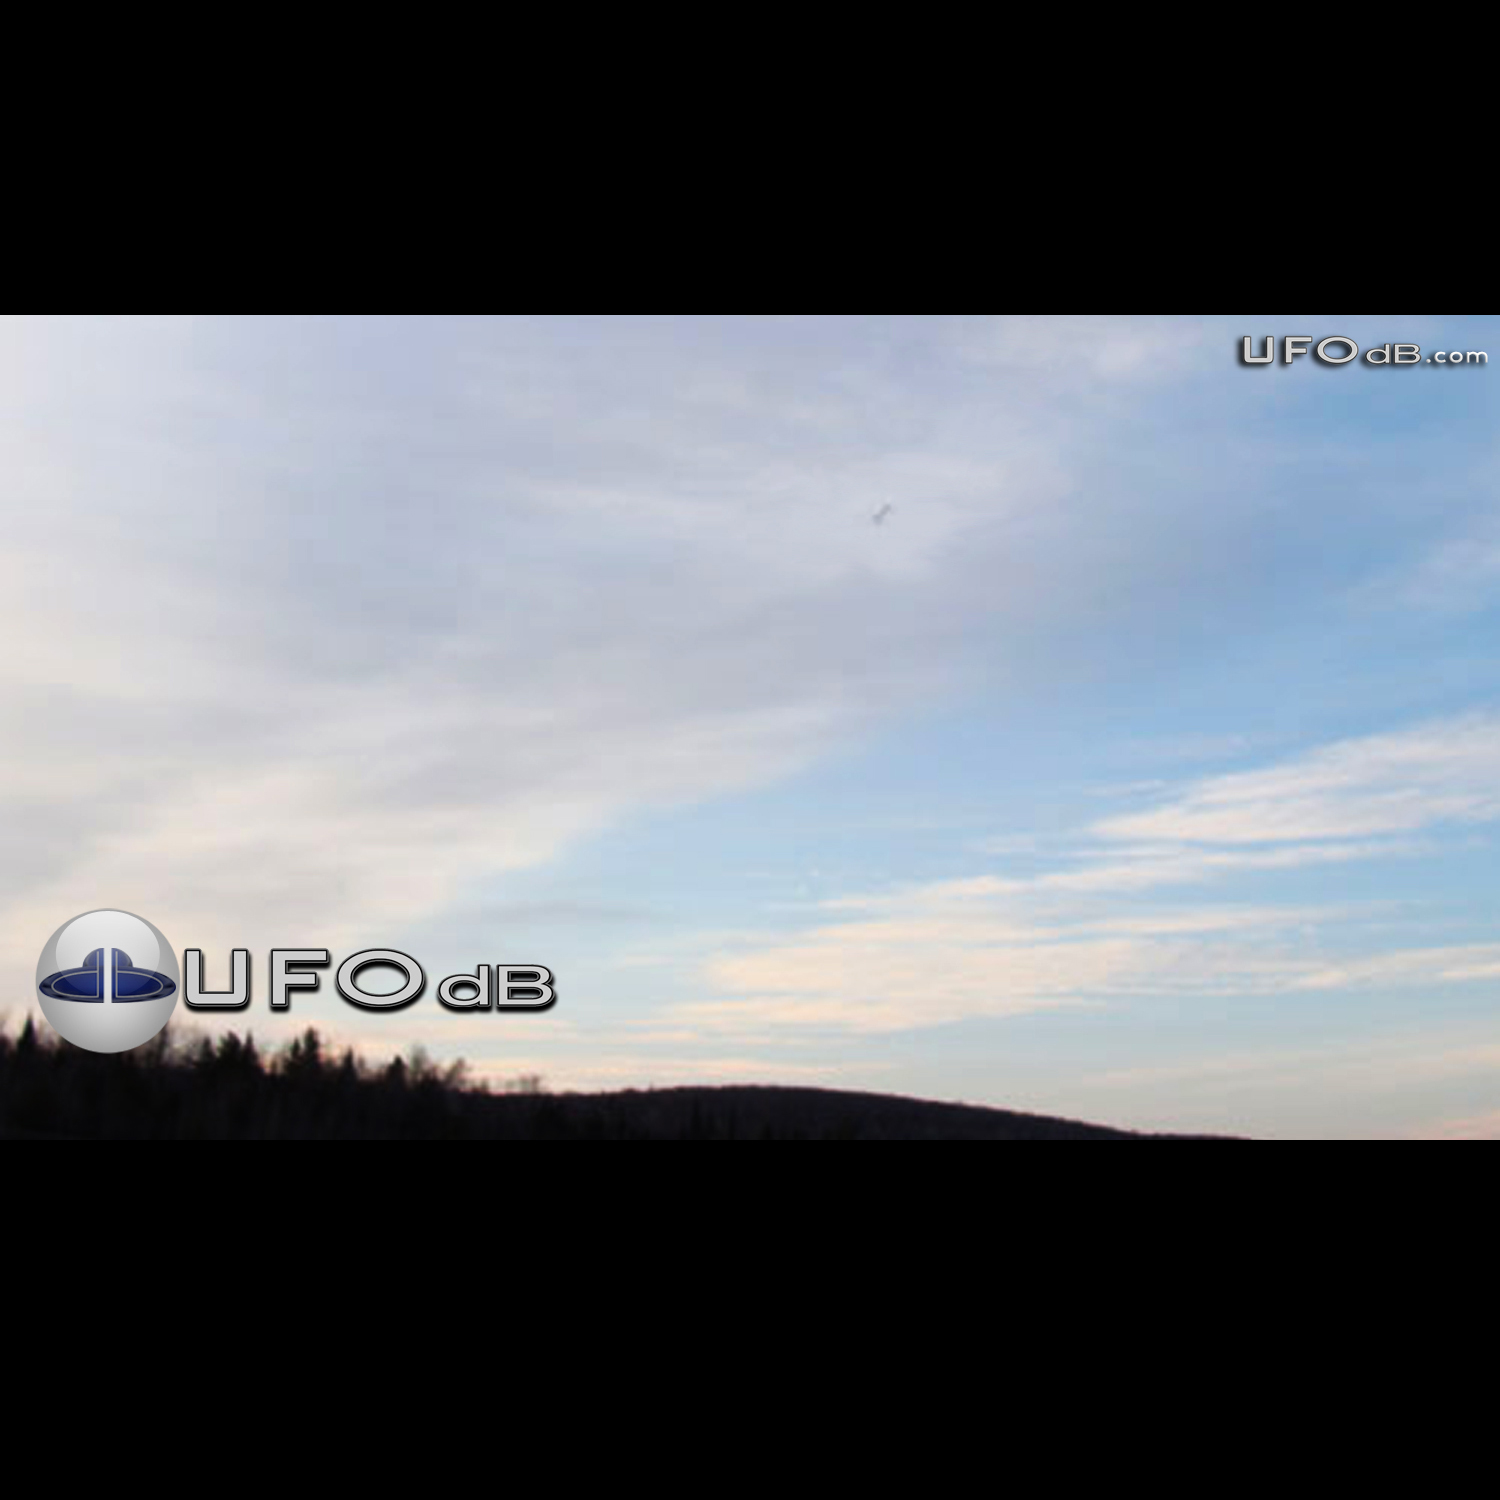 Giant T shaped UFO near USA border | New Brunswick Canada | April 2011 UFO Picture #307-1